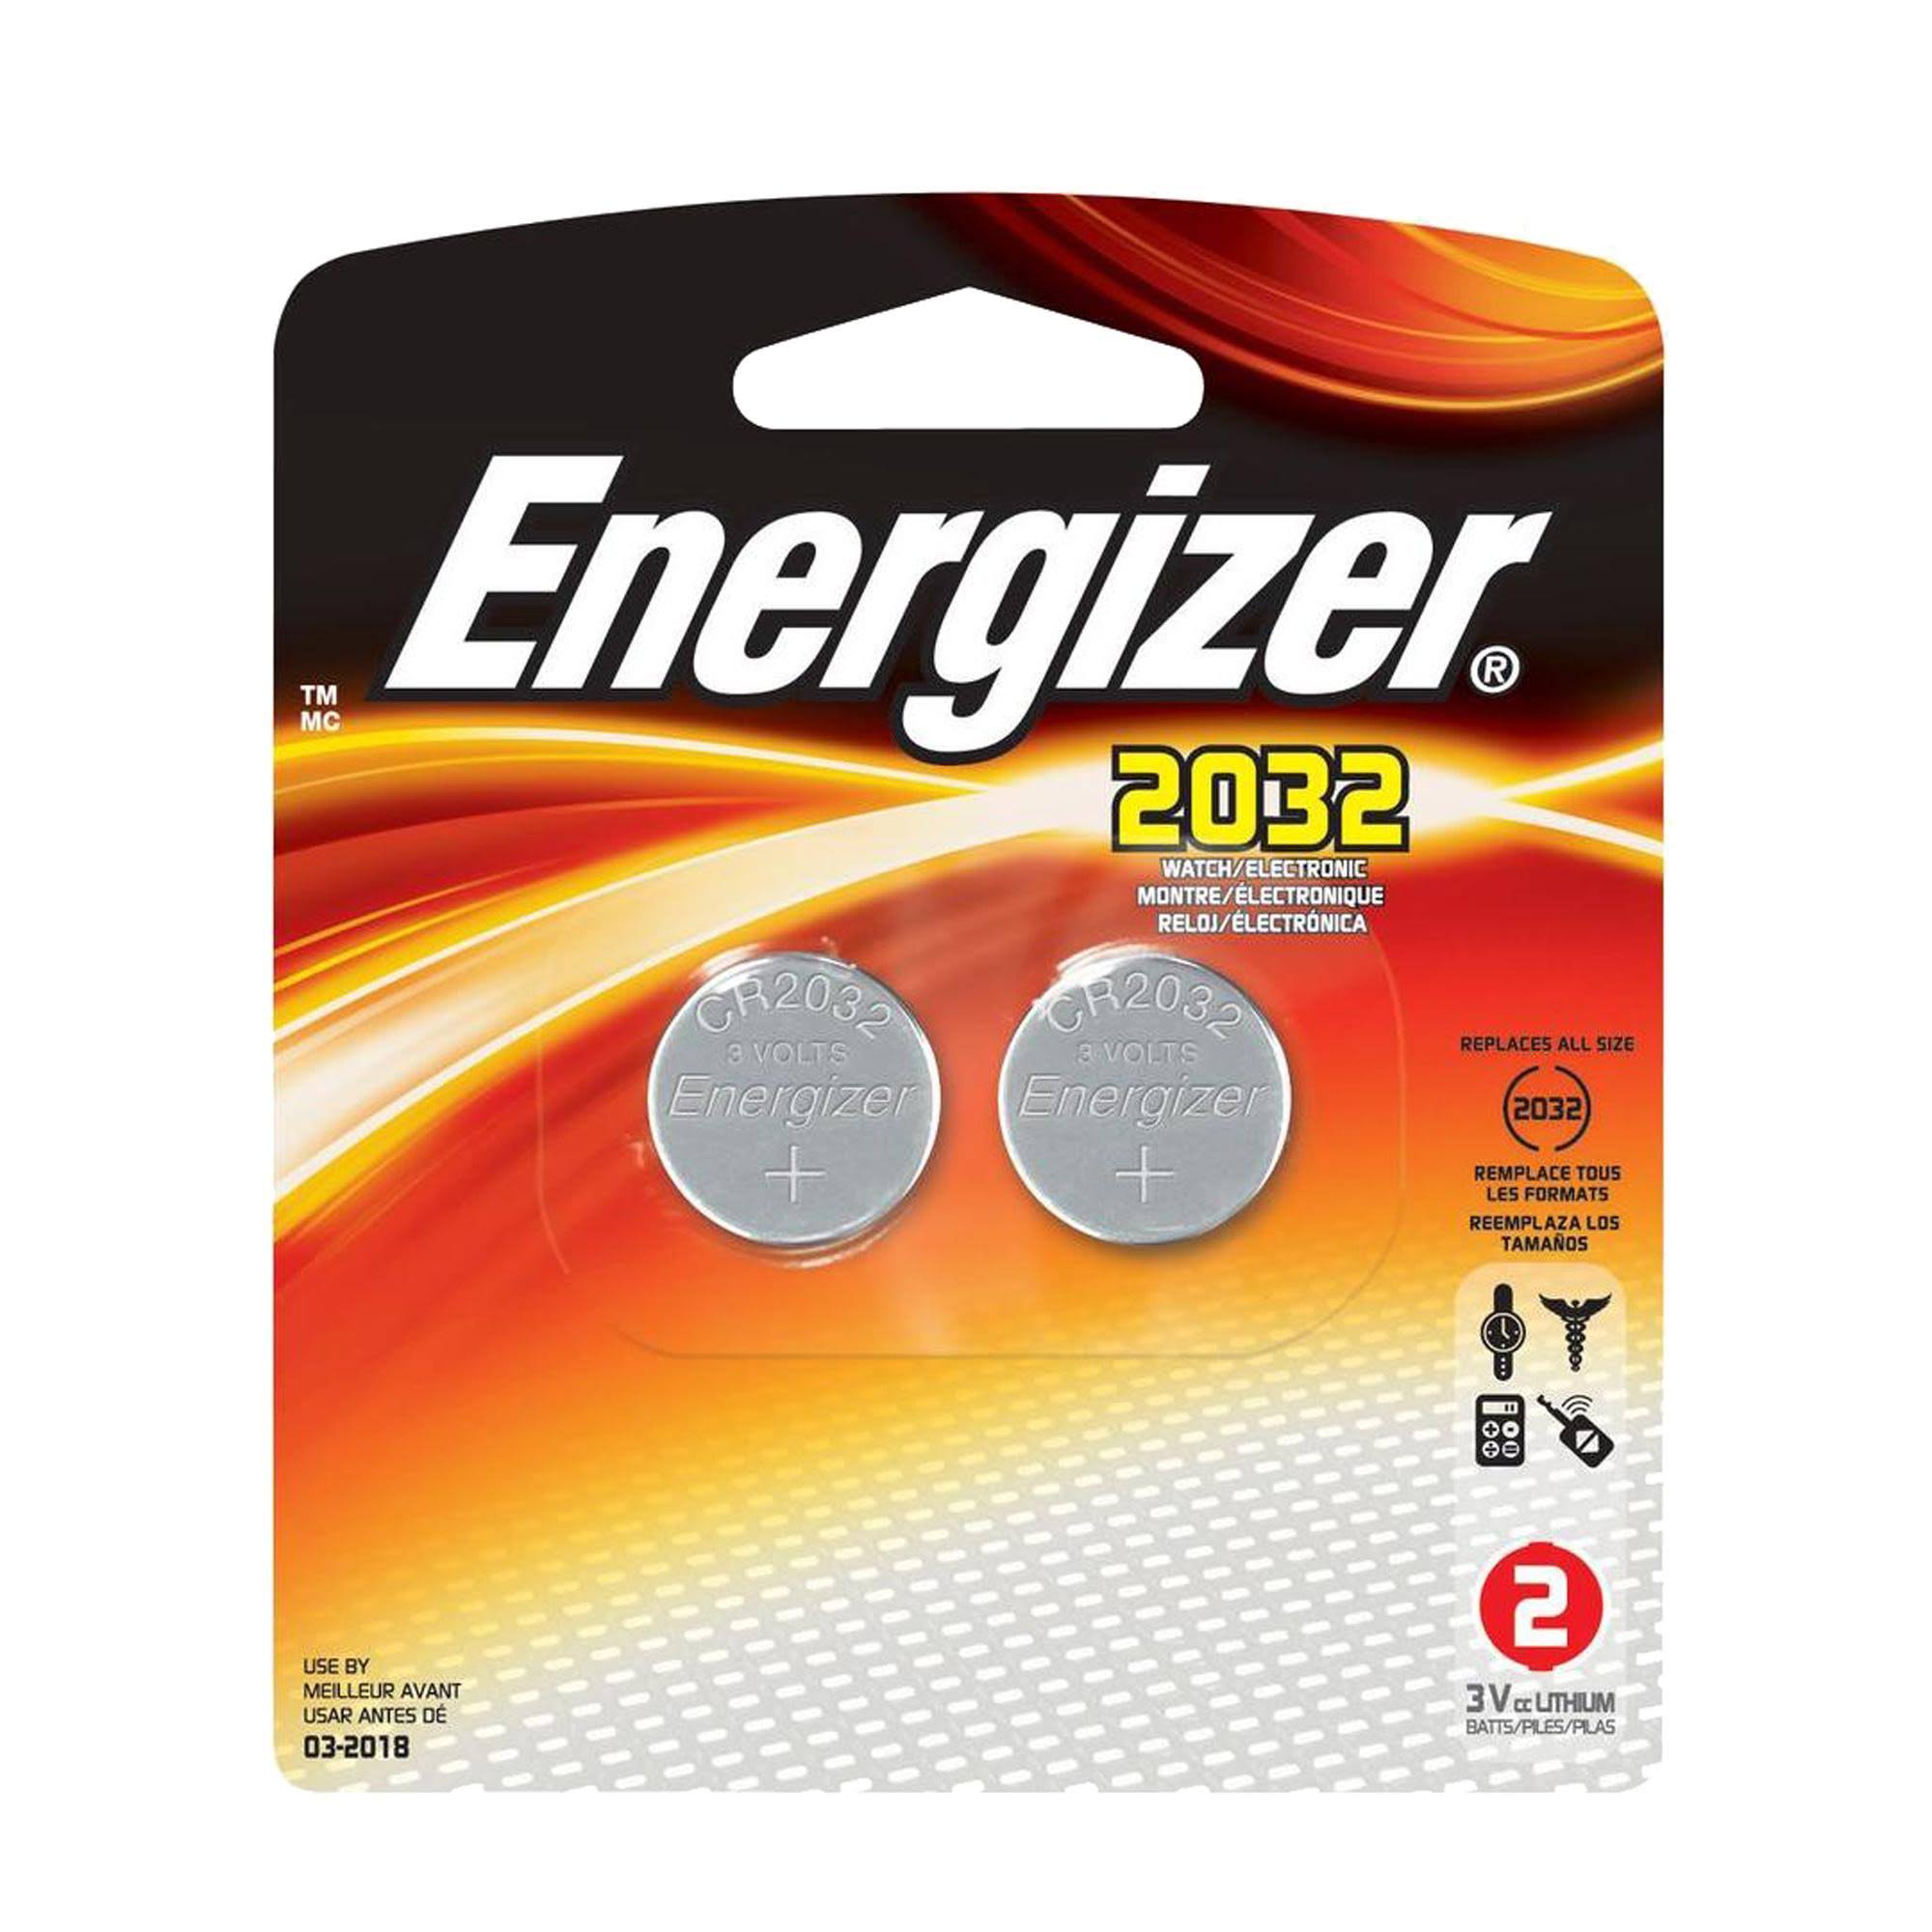 Energizer 2032BP2 Lithium Battery - 3V